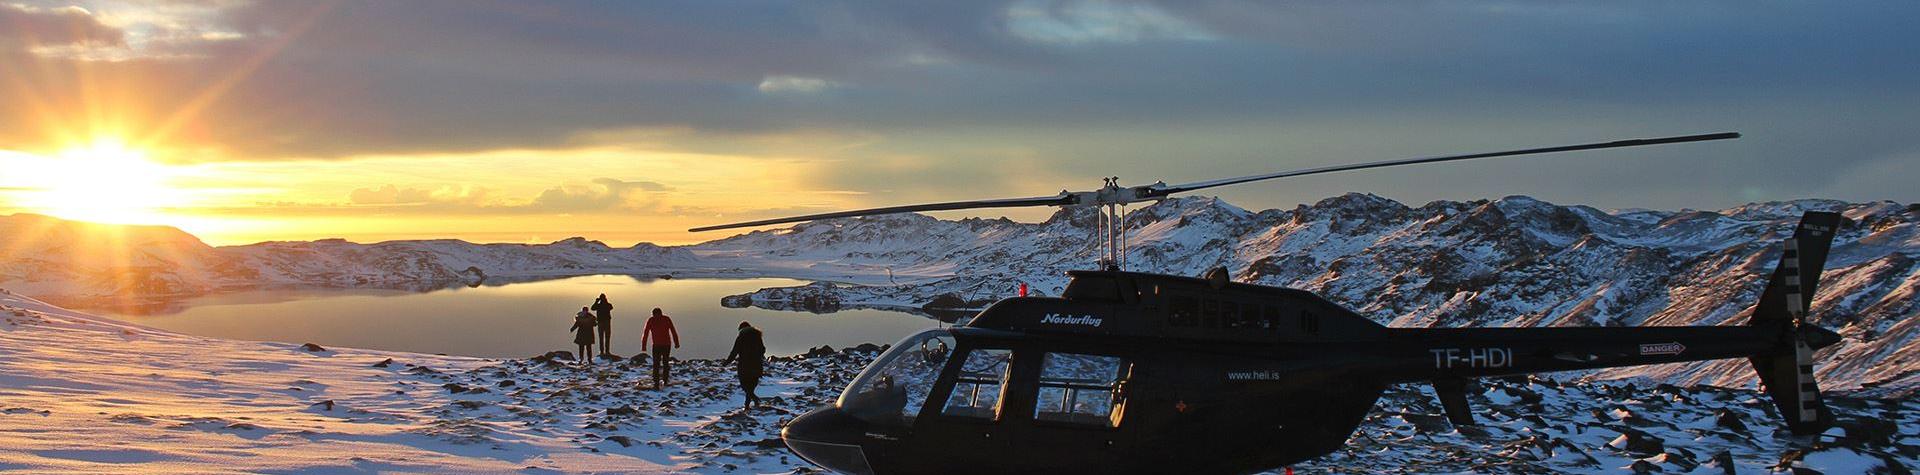 Helikoptertur över Reykjavik